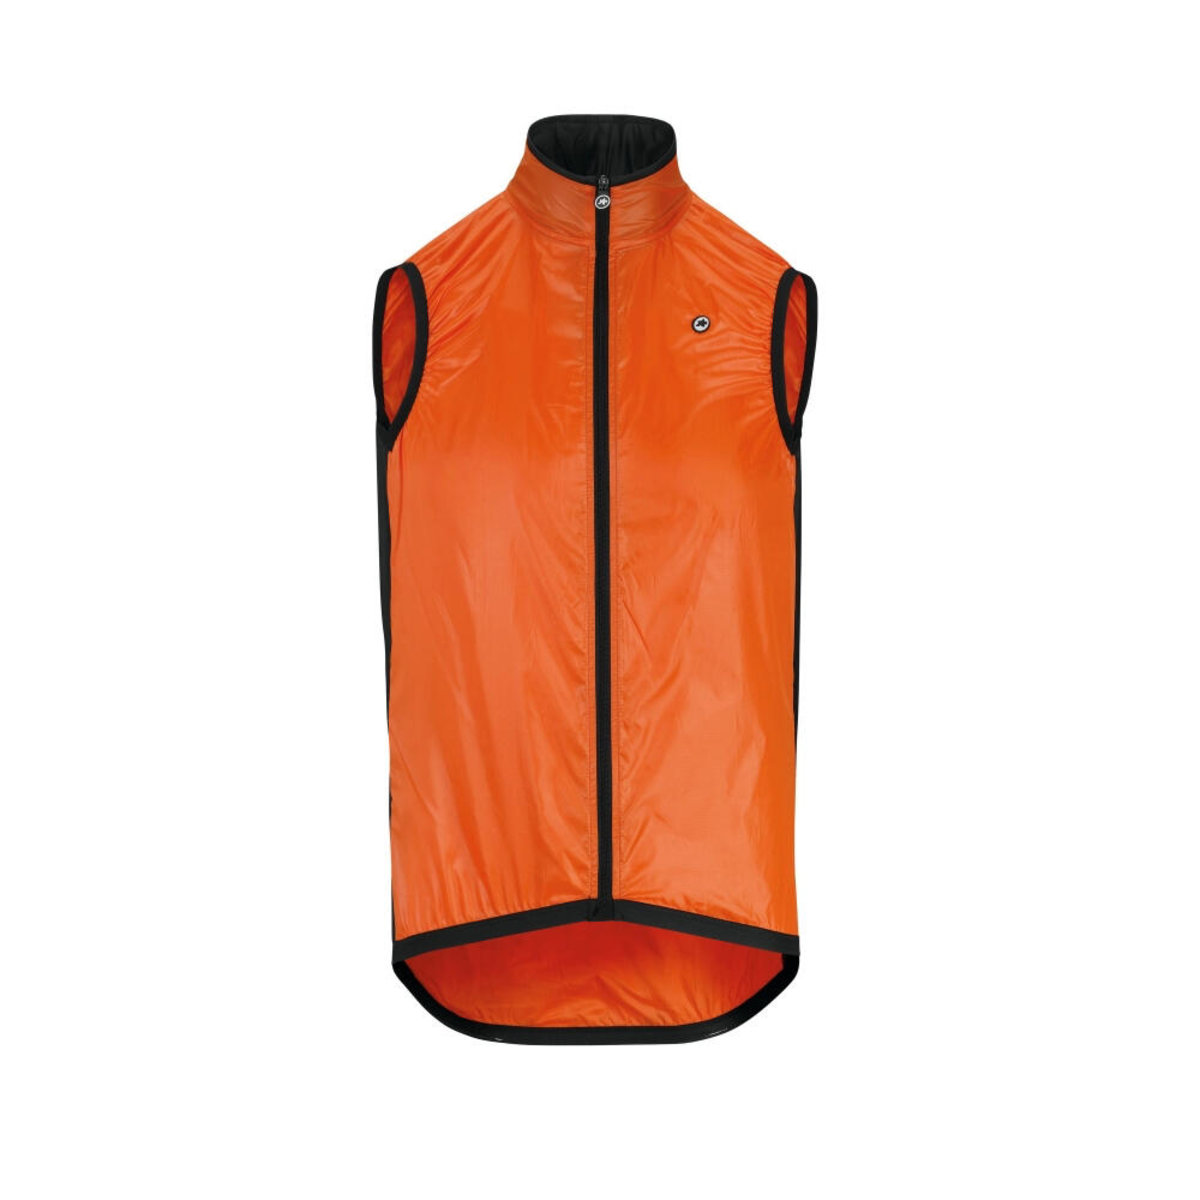 Жилетка ASSOS Mille GT Wind Vest Lolly Red, мужская, оранжевая, XLG фото 